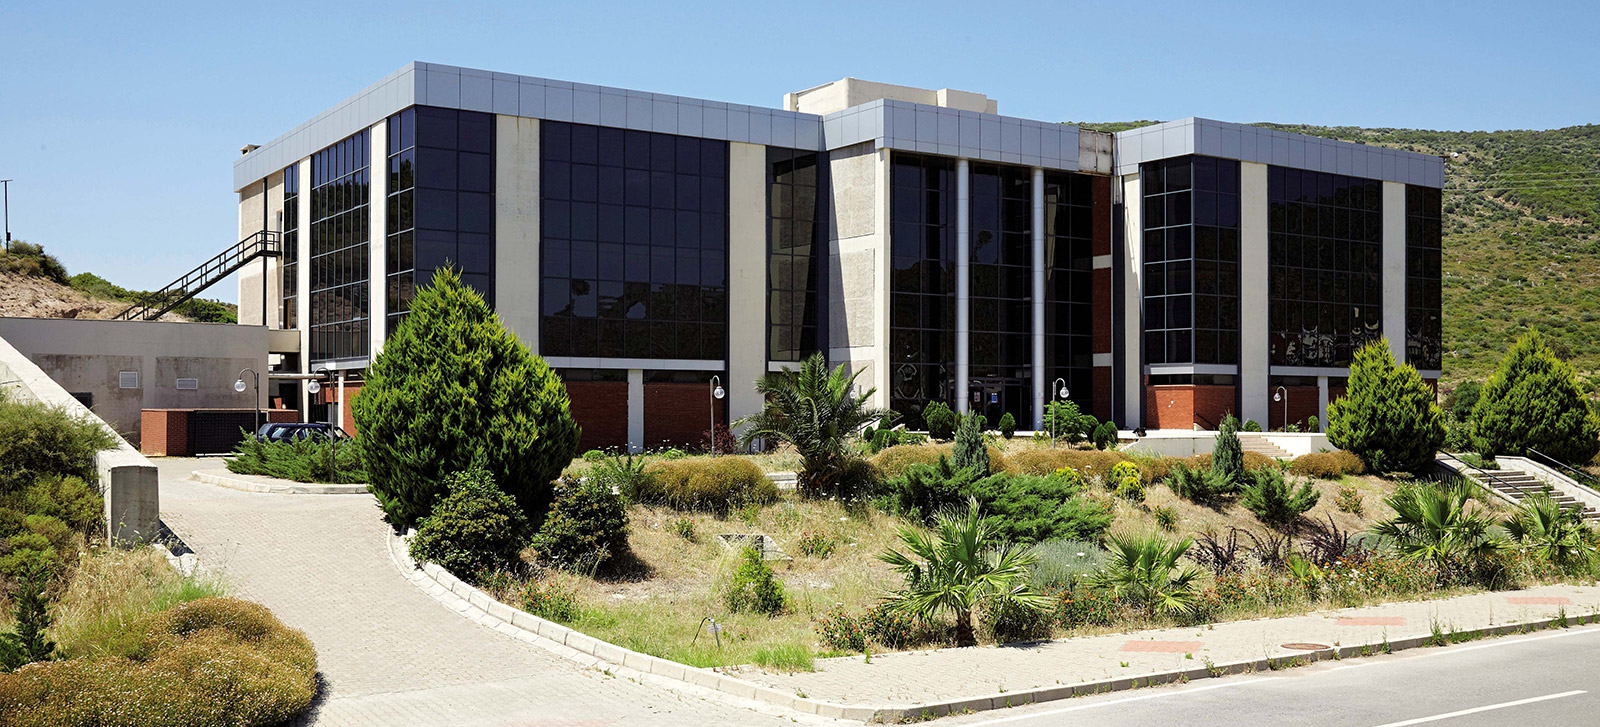 izmiryuksek universitesi find and study 5 - Izmir Institute of Technology